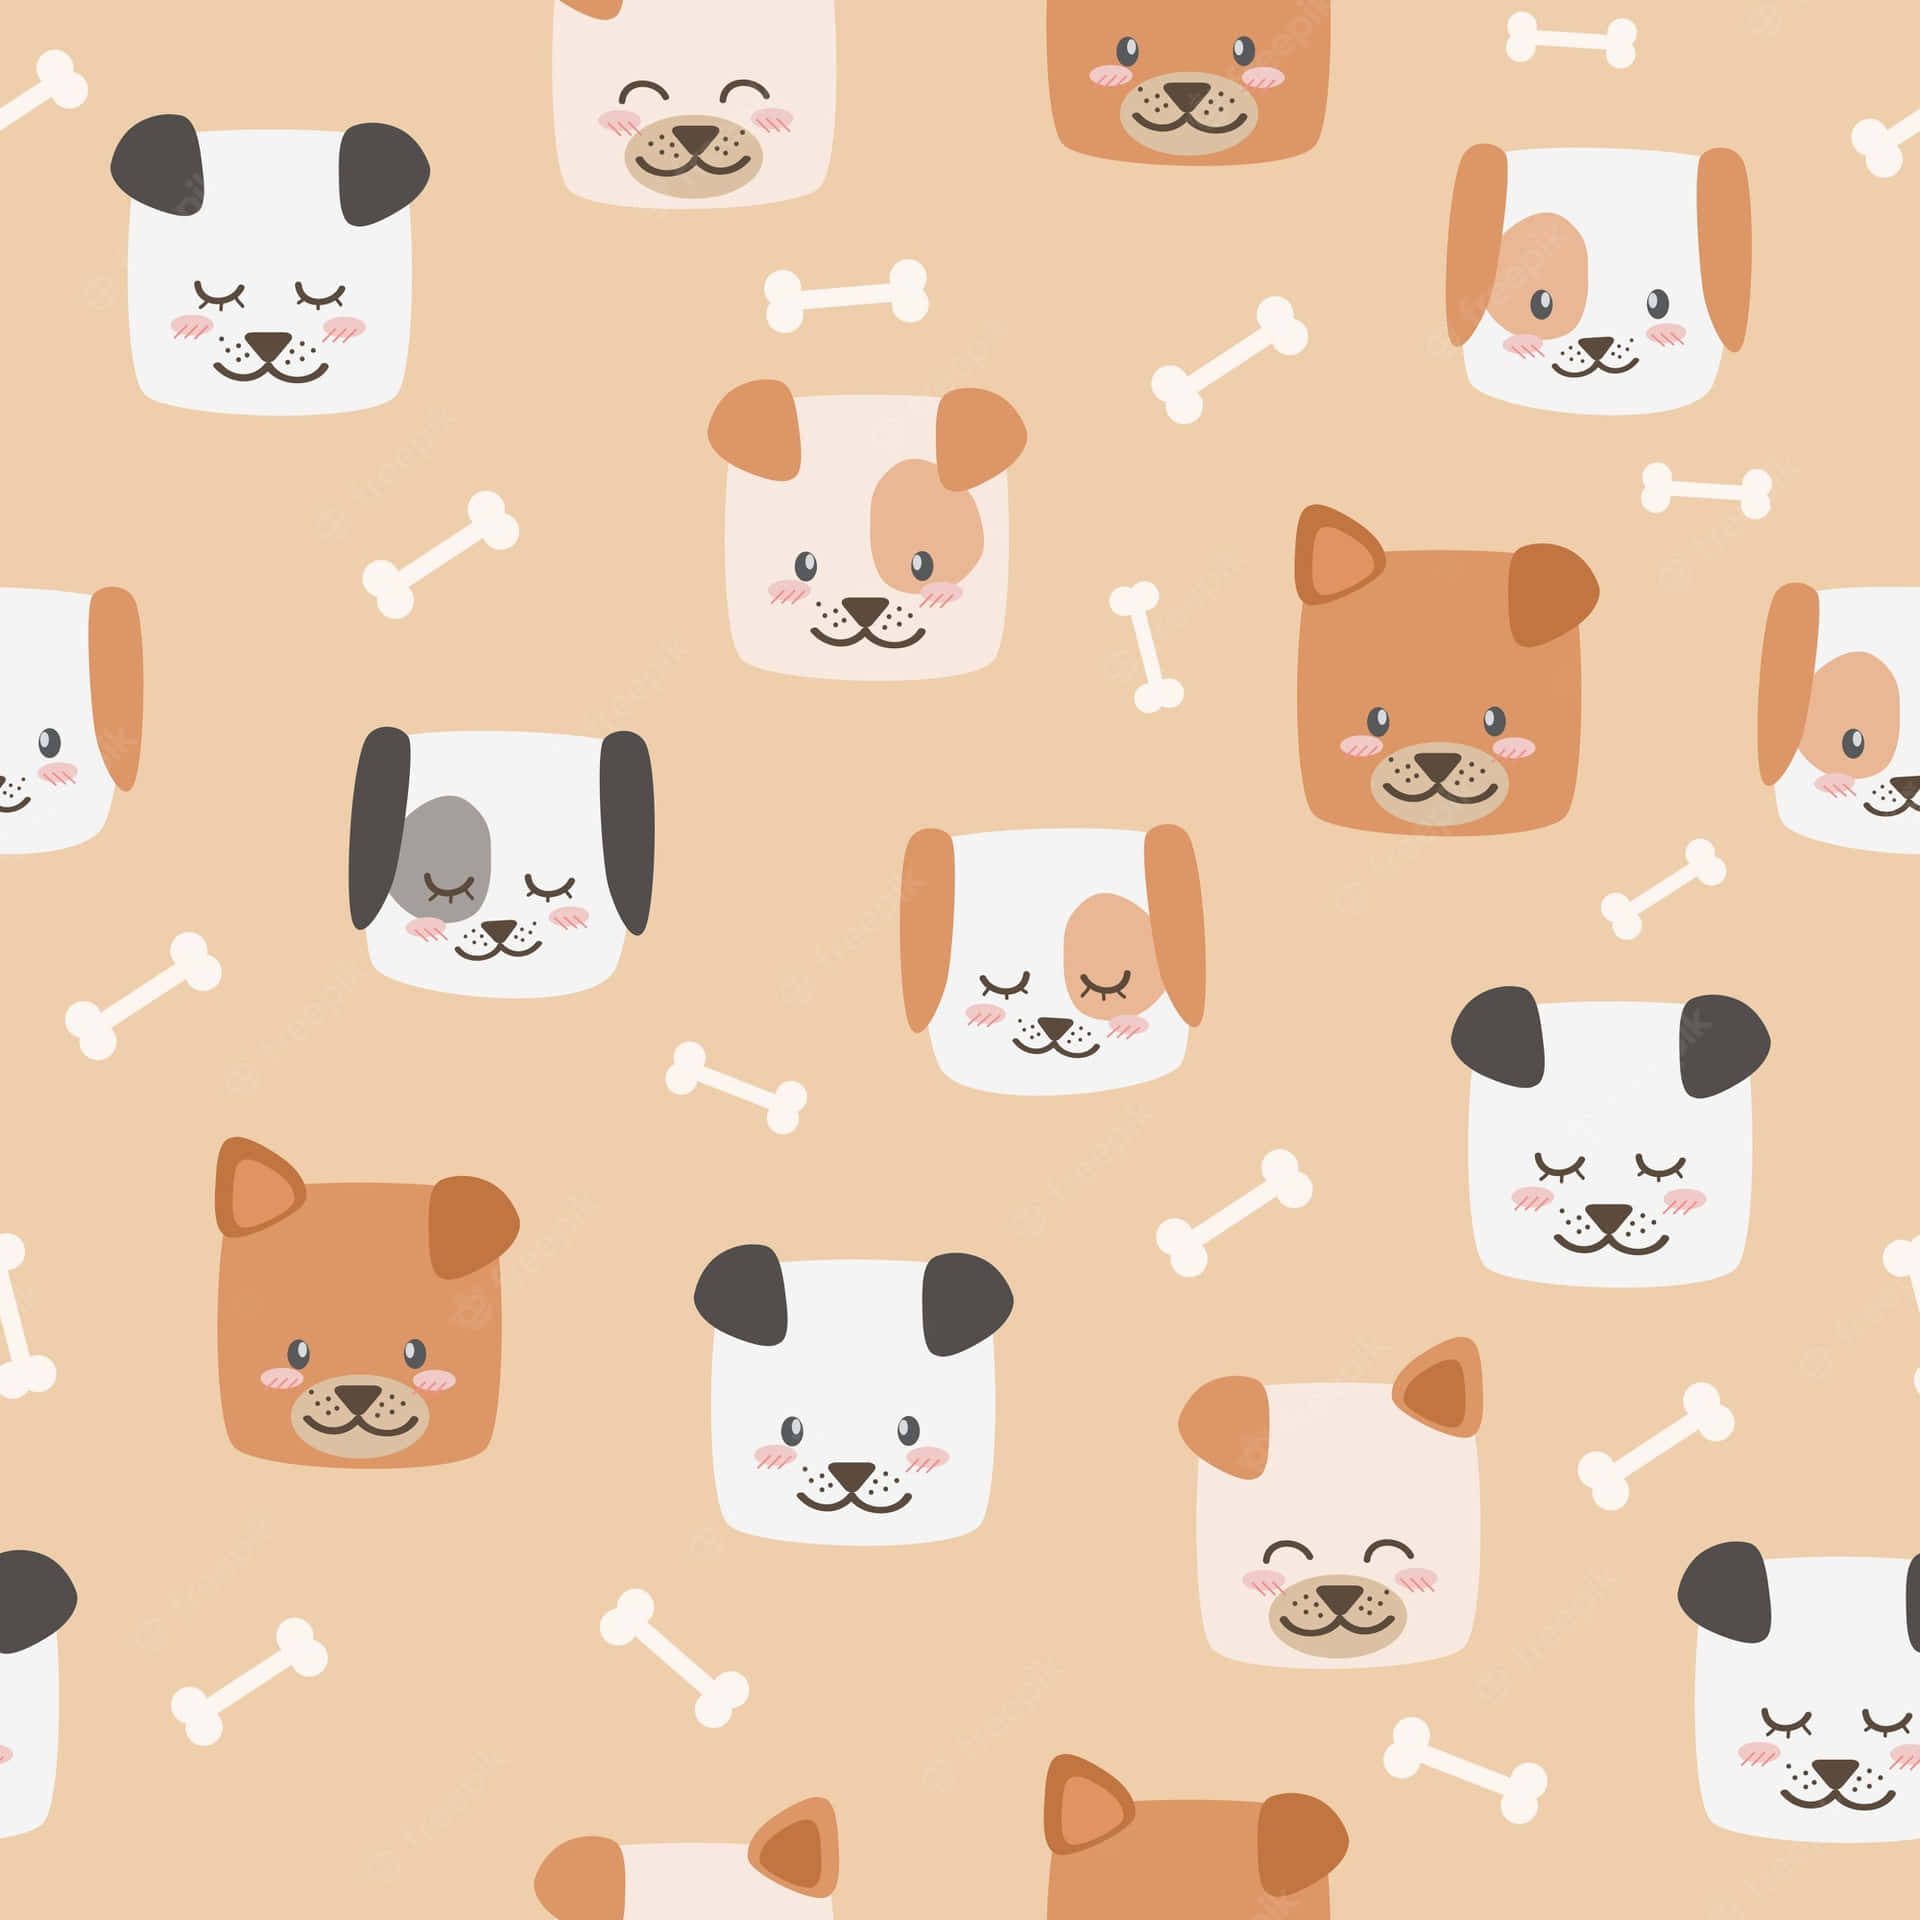 Free Cute Cartoon Animal Wallpaper Downloads, [100+] Cute Cartoon Animal  Wallpapers for FREE 